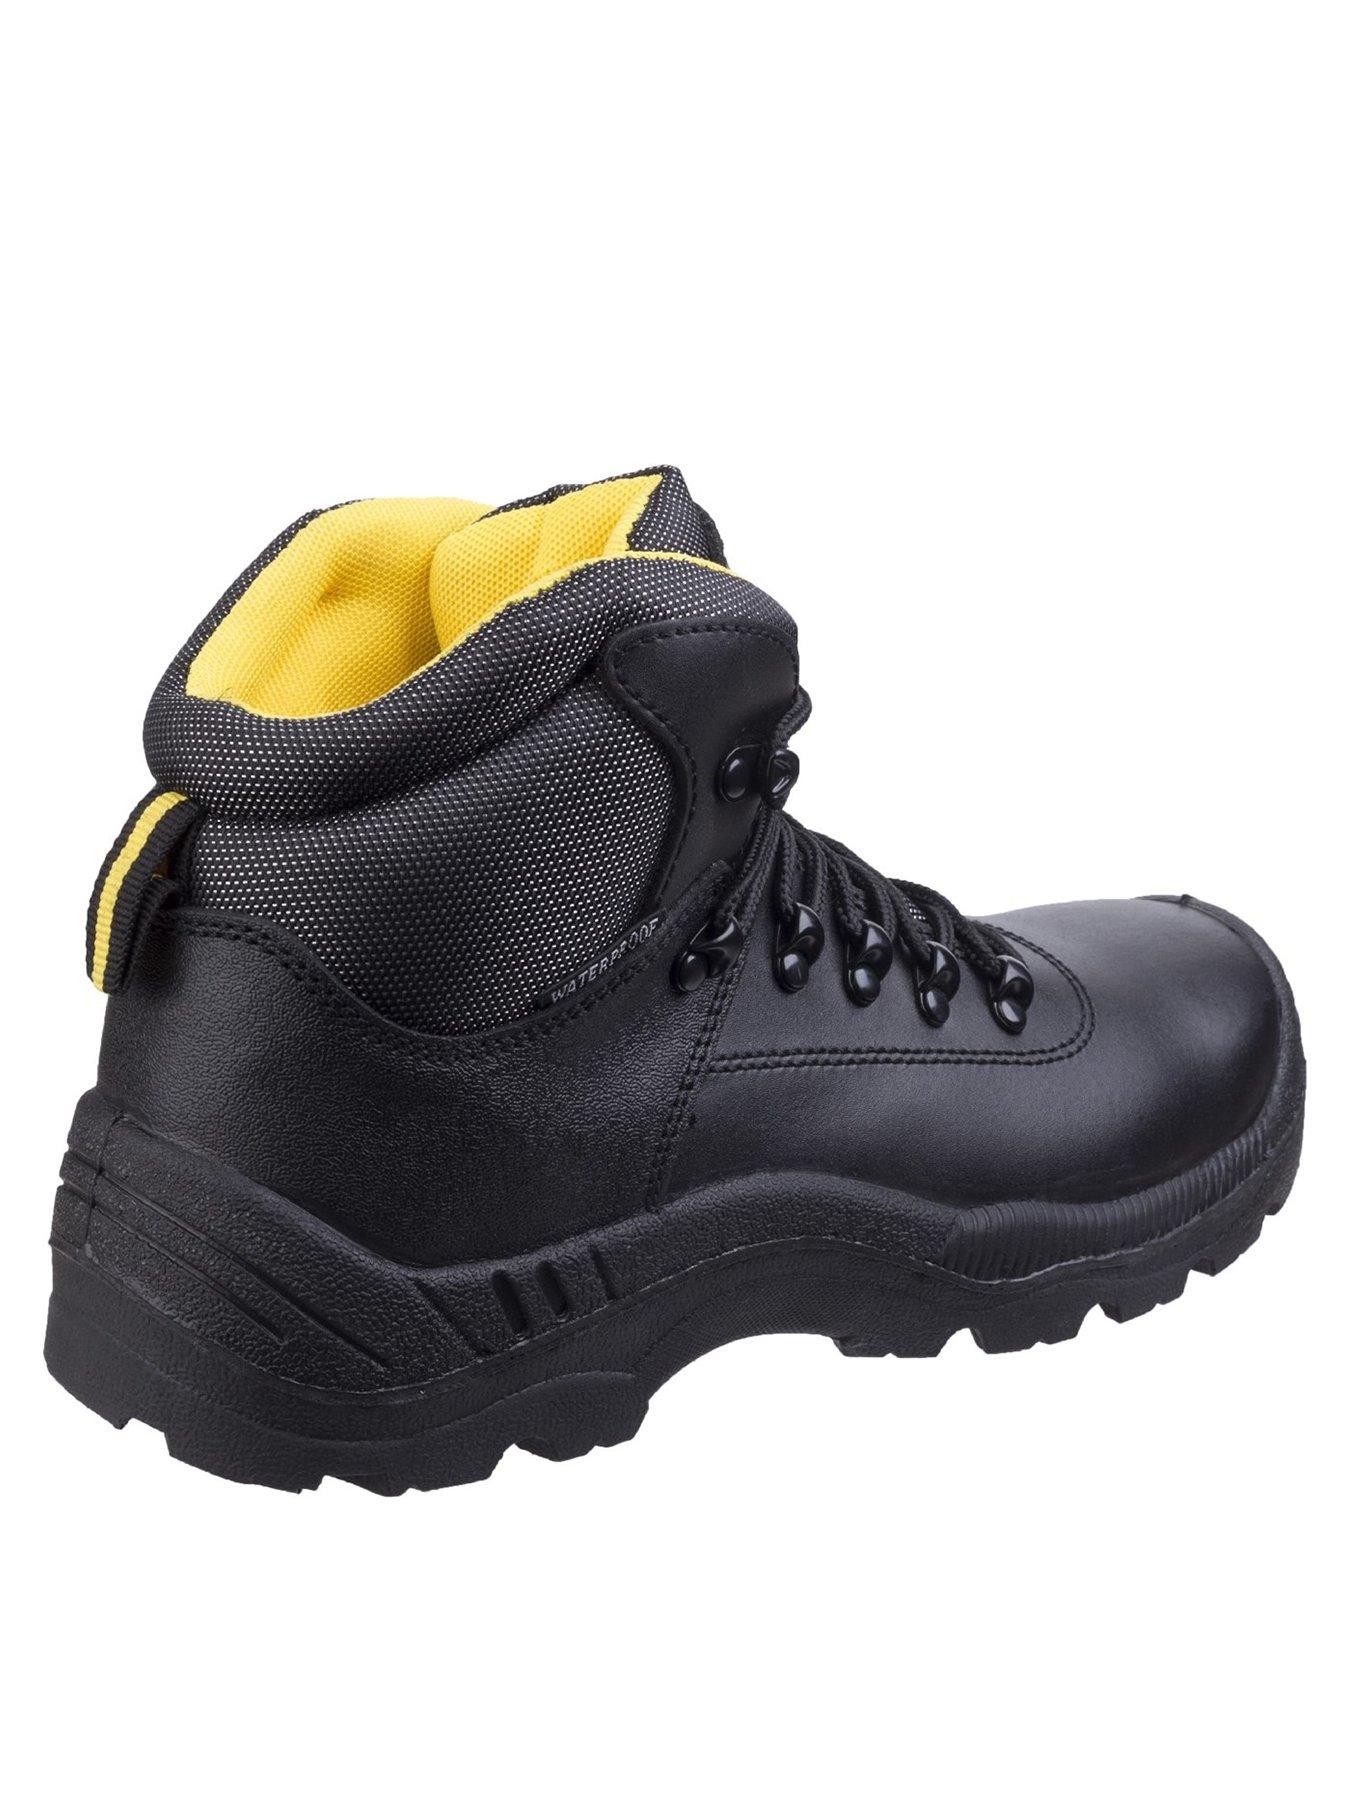 Amblers Safety Safety Fs220 Shoes - Black | very.co.uk